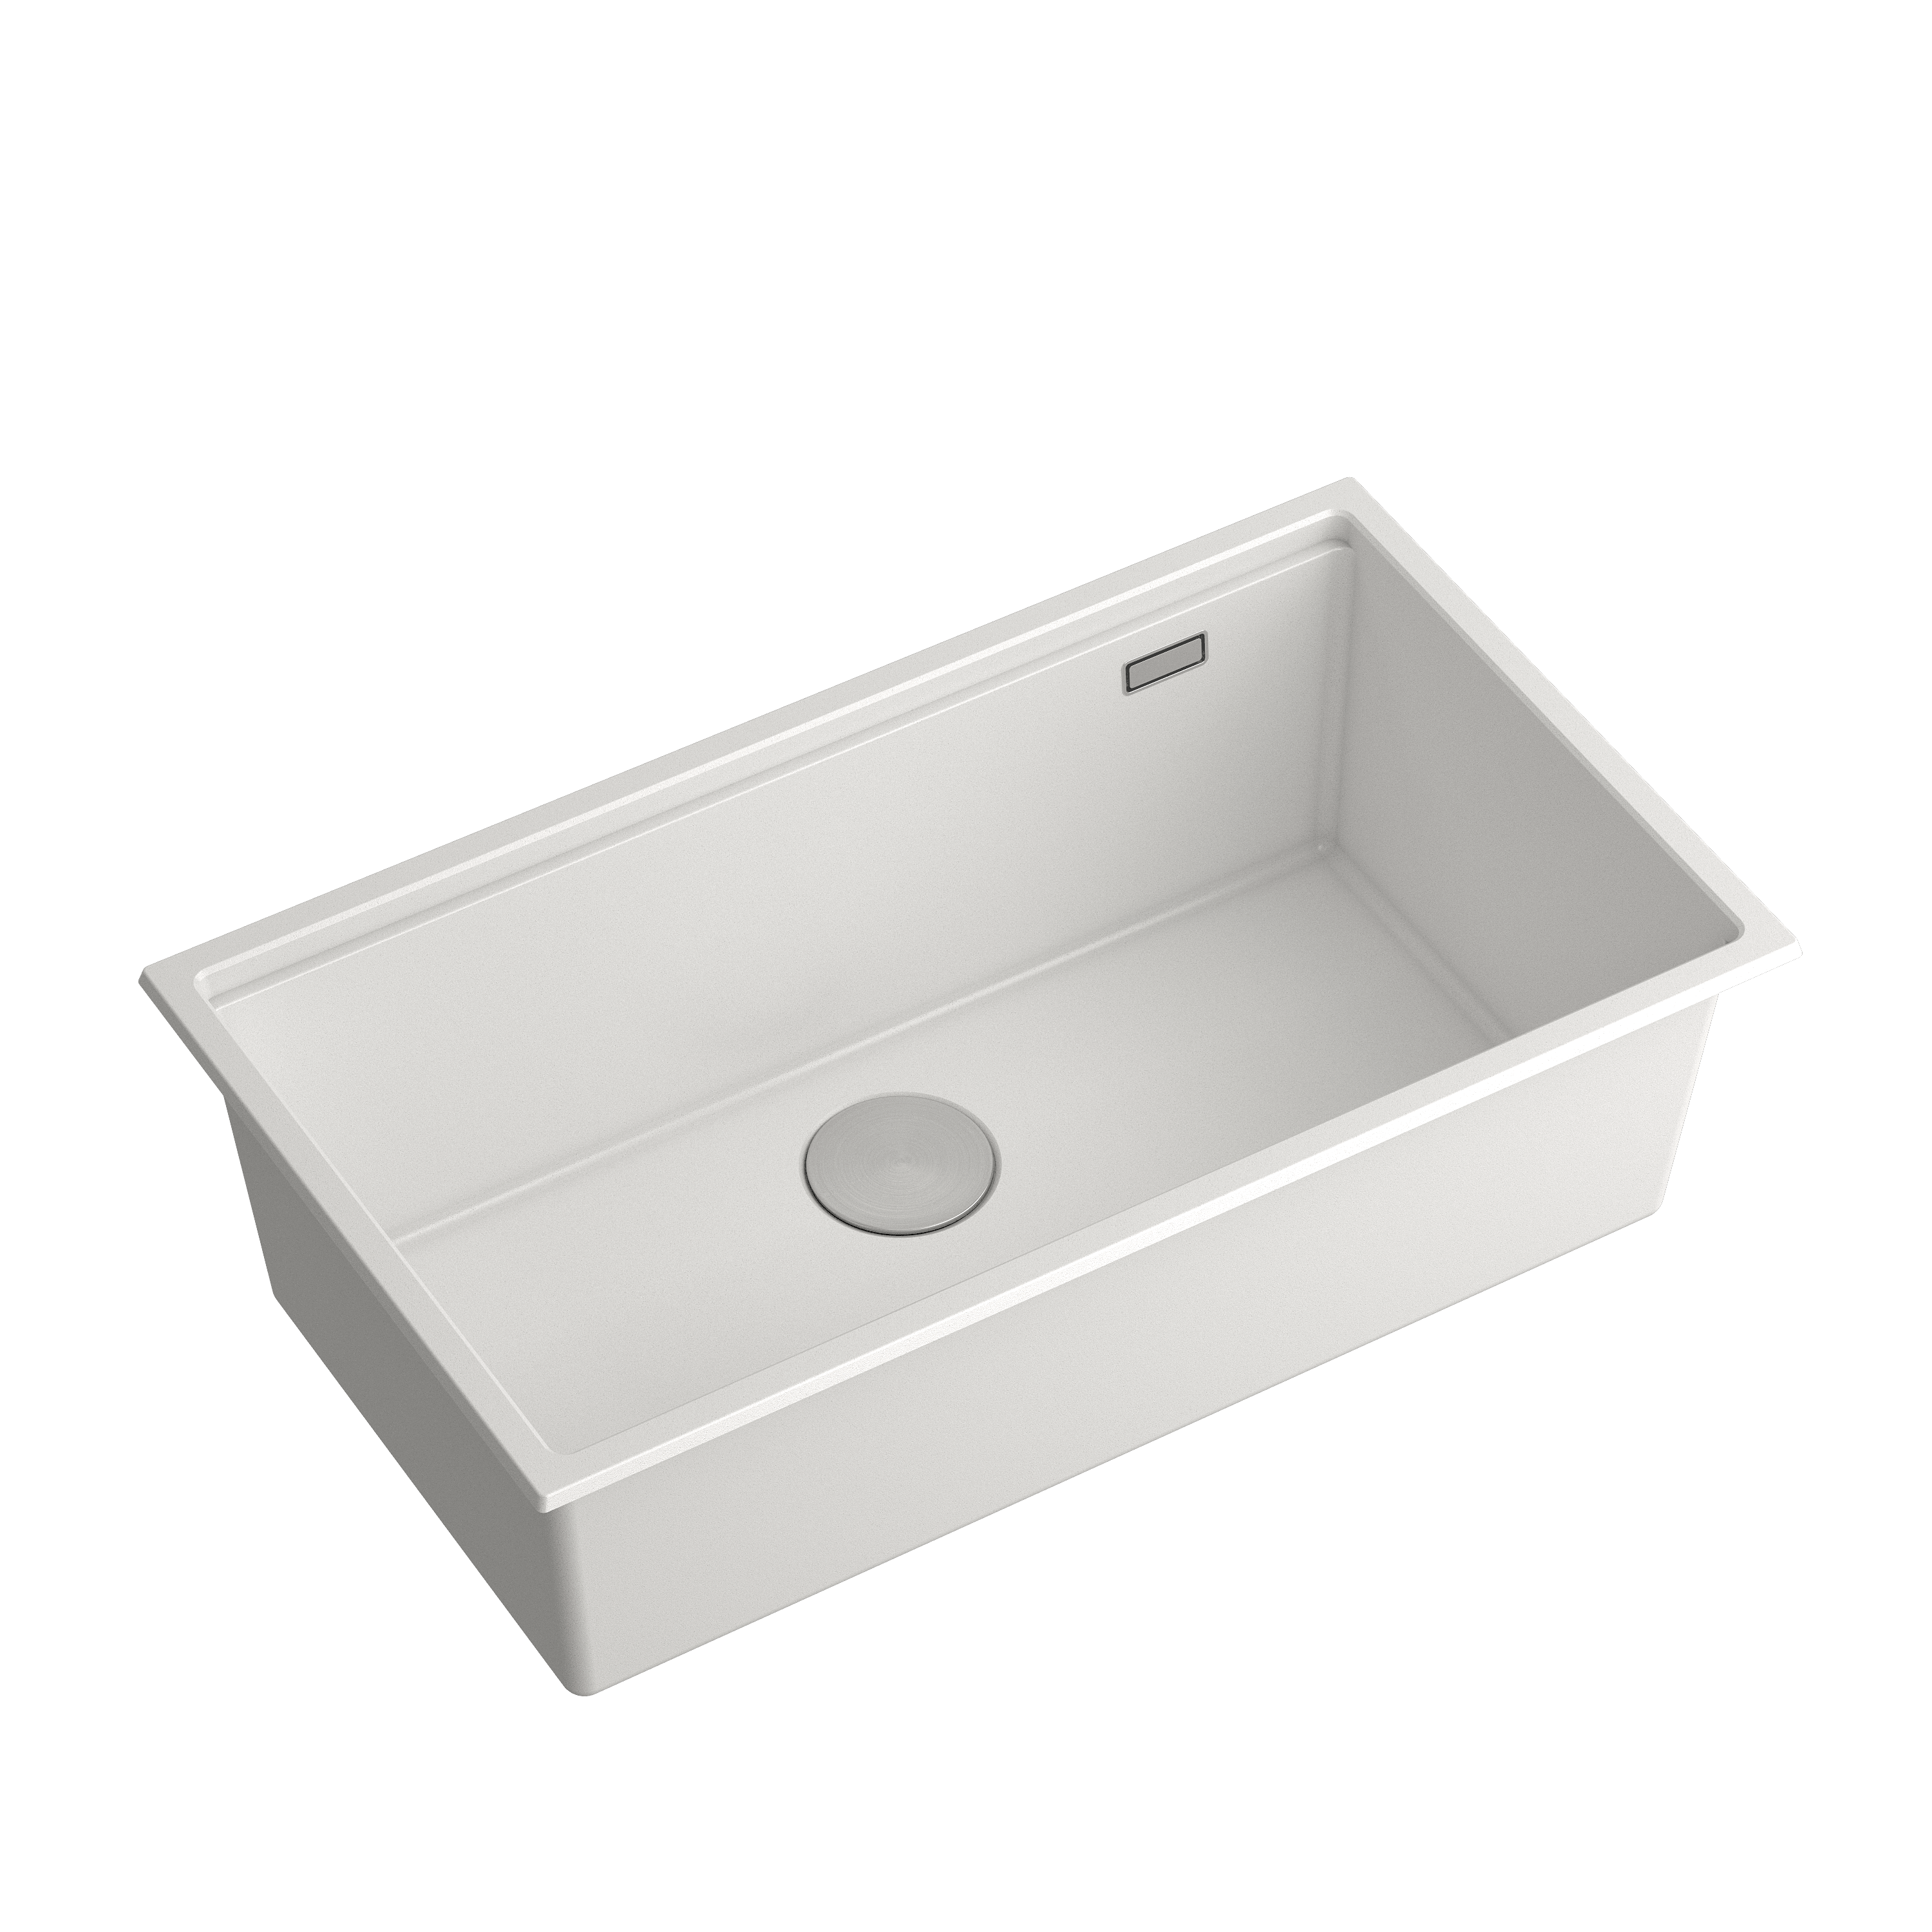 Quadron Clark 840 White, topmount or undermount sink - Olif